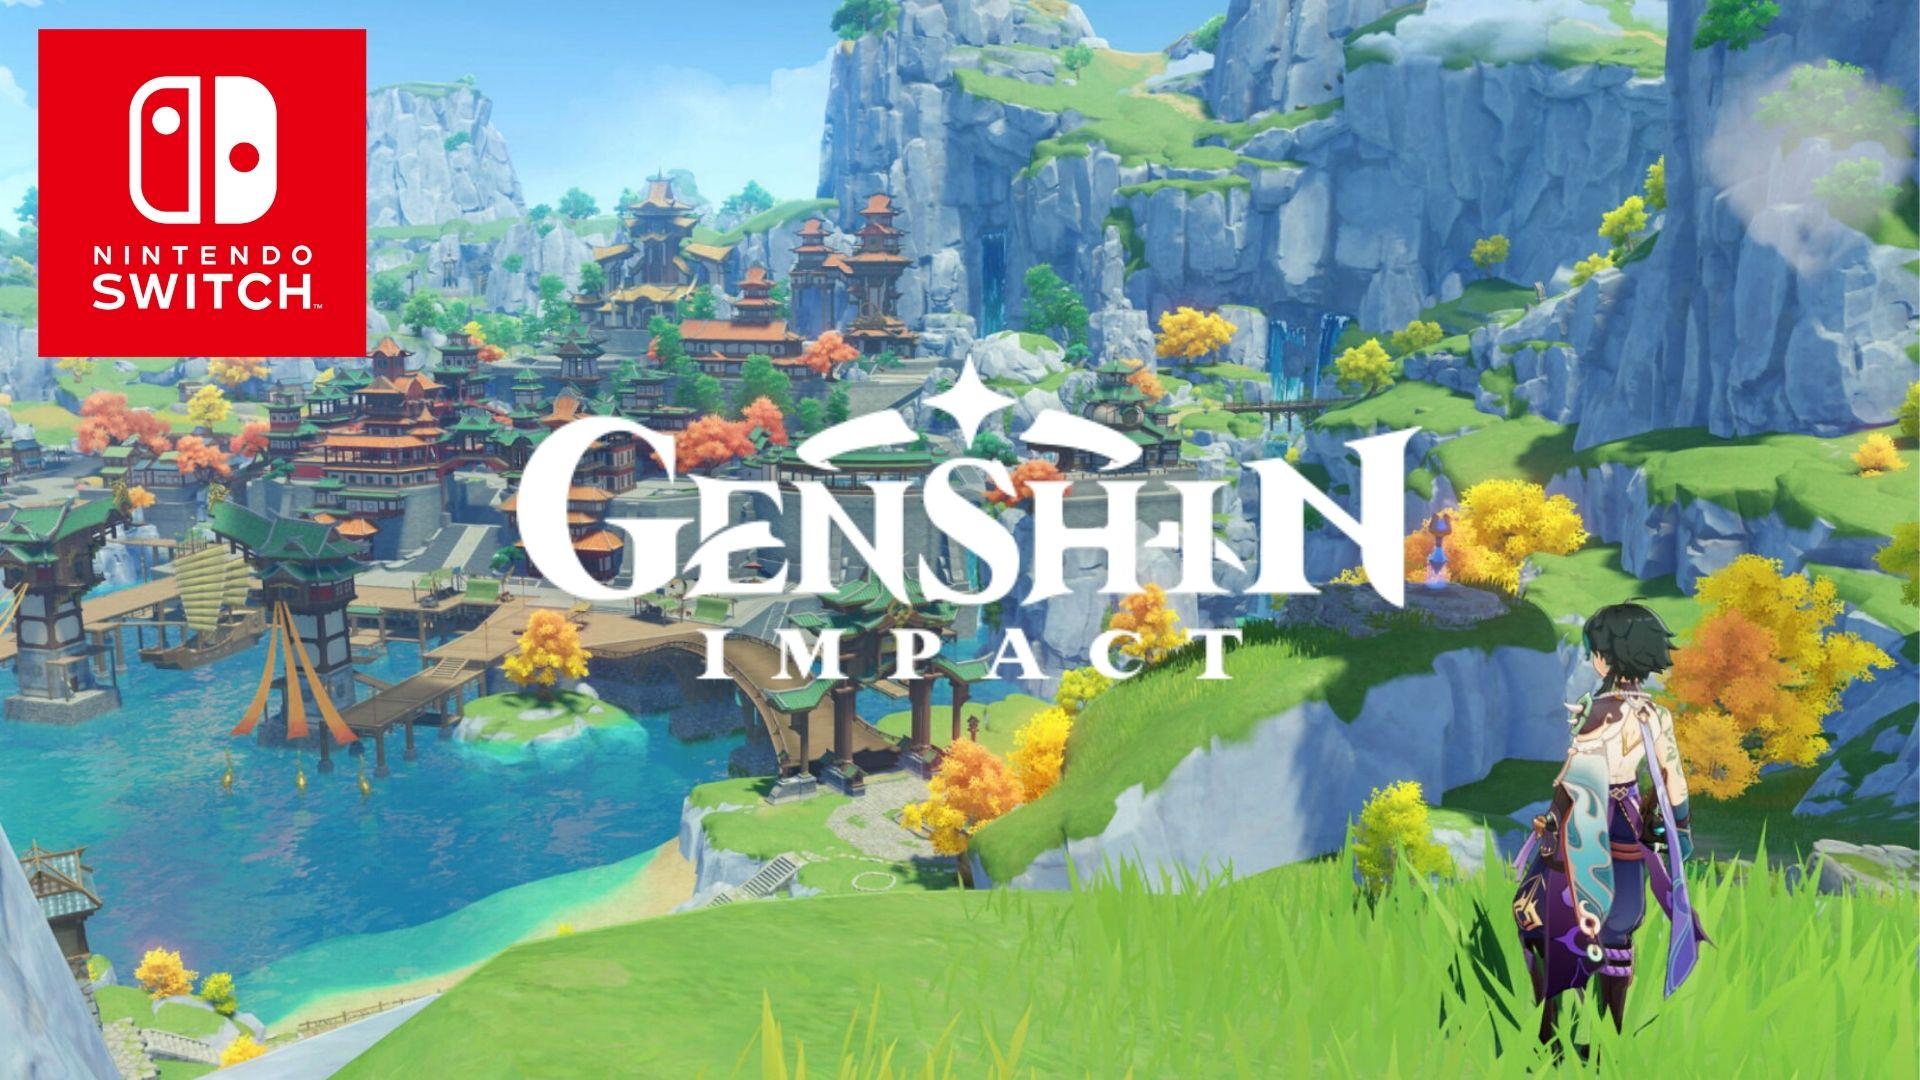 Genshin Impact background with Switch logo